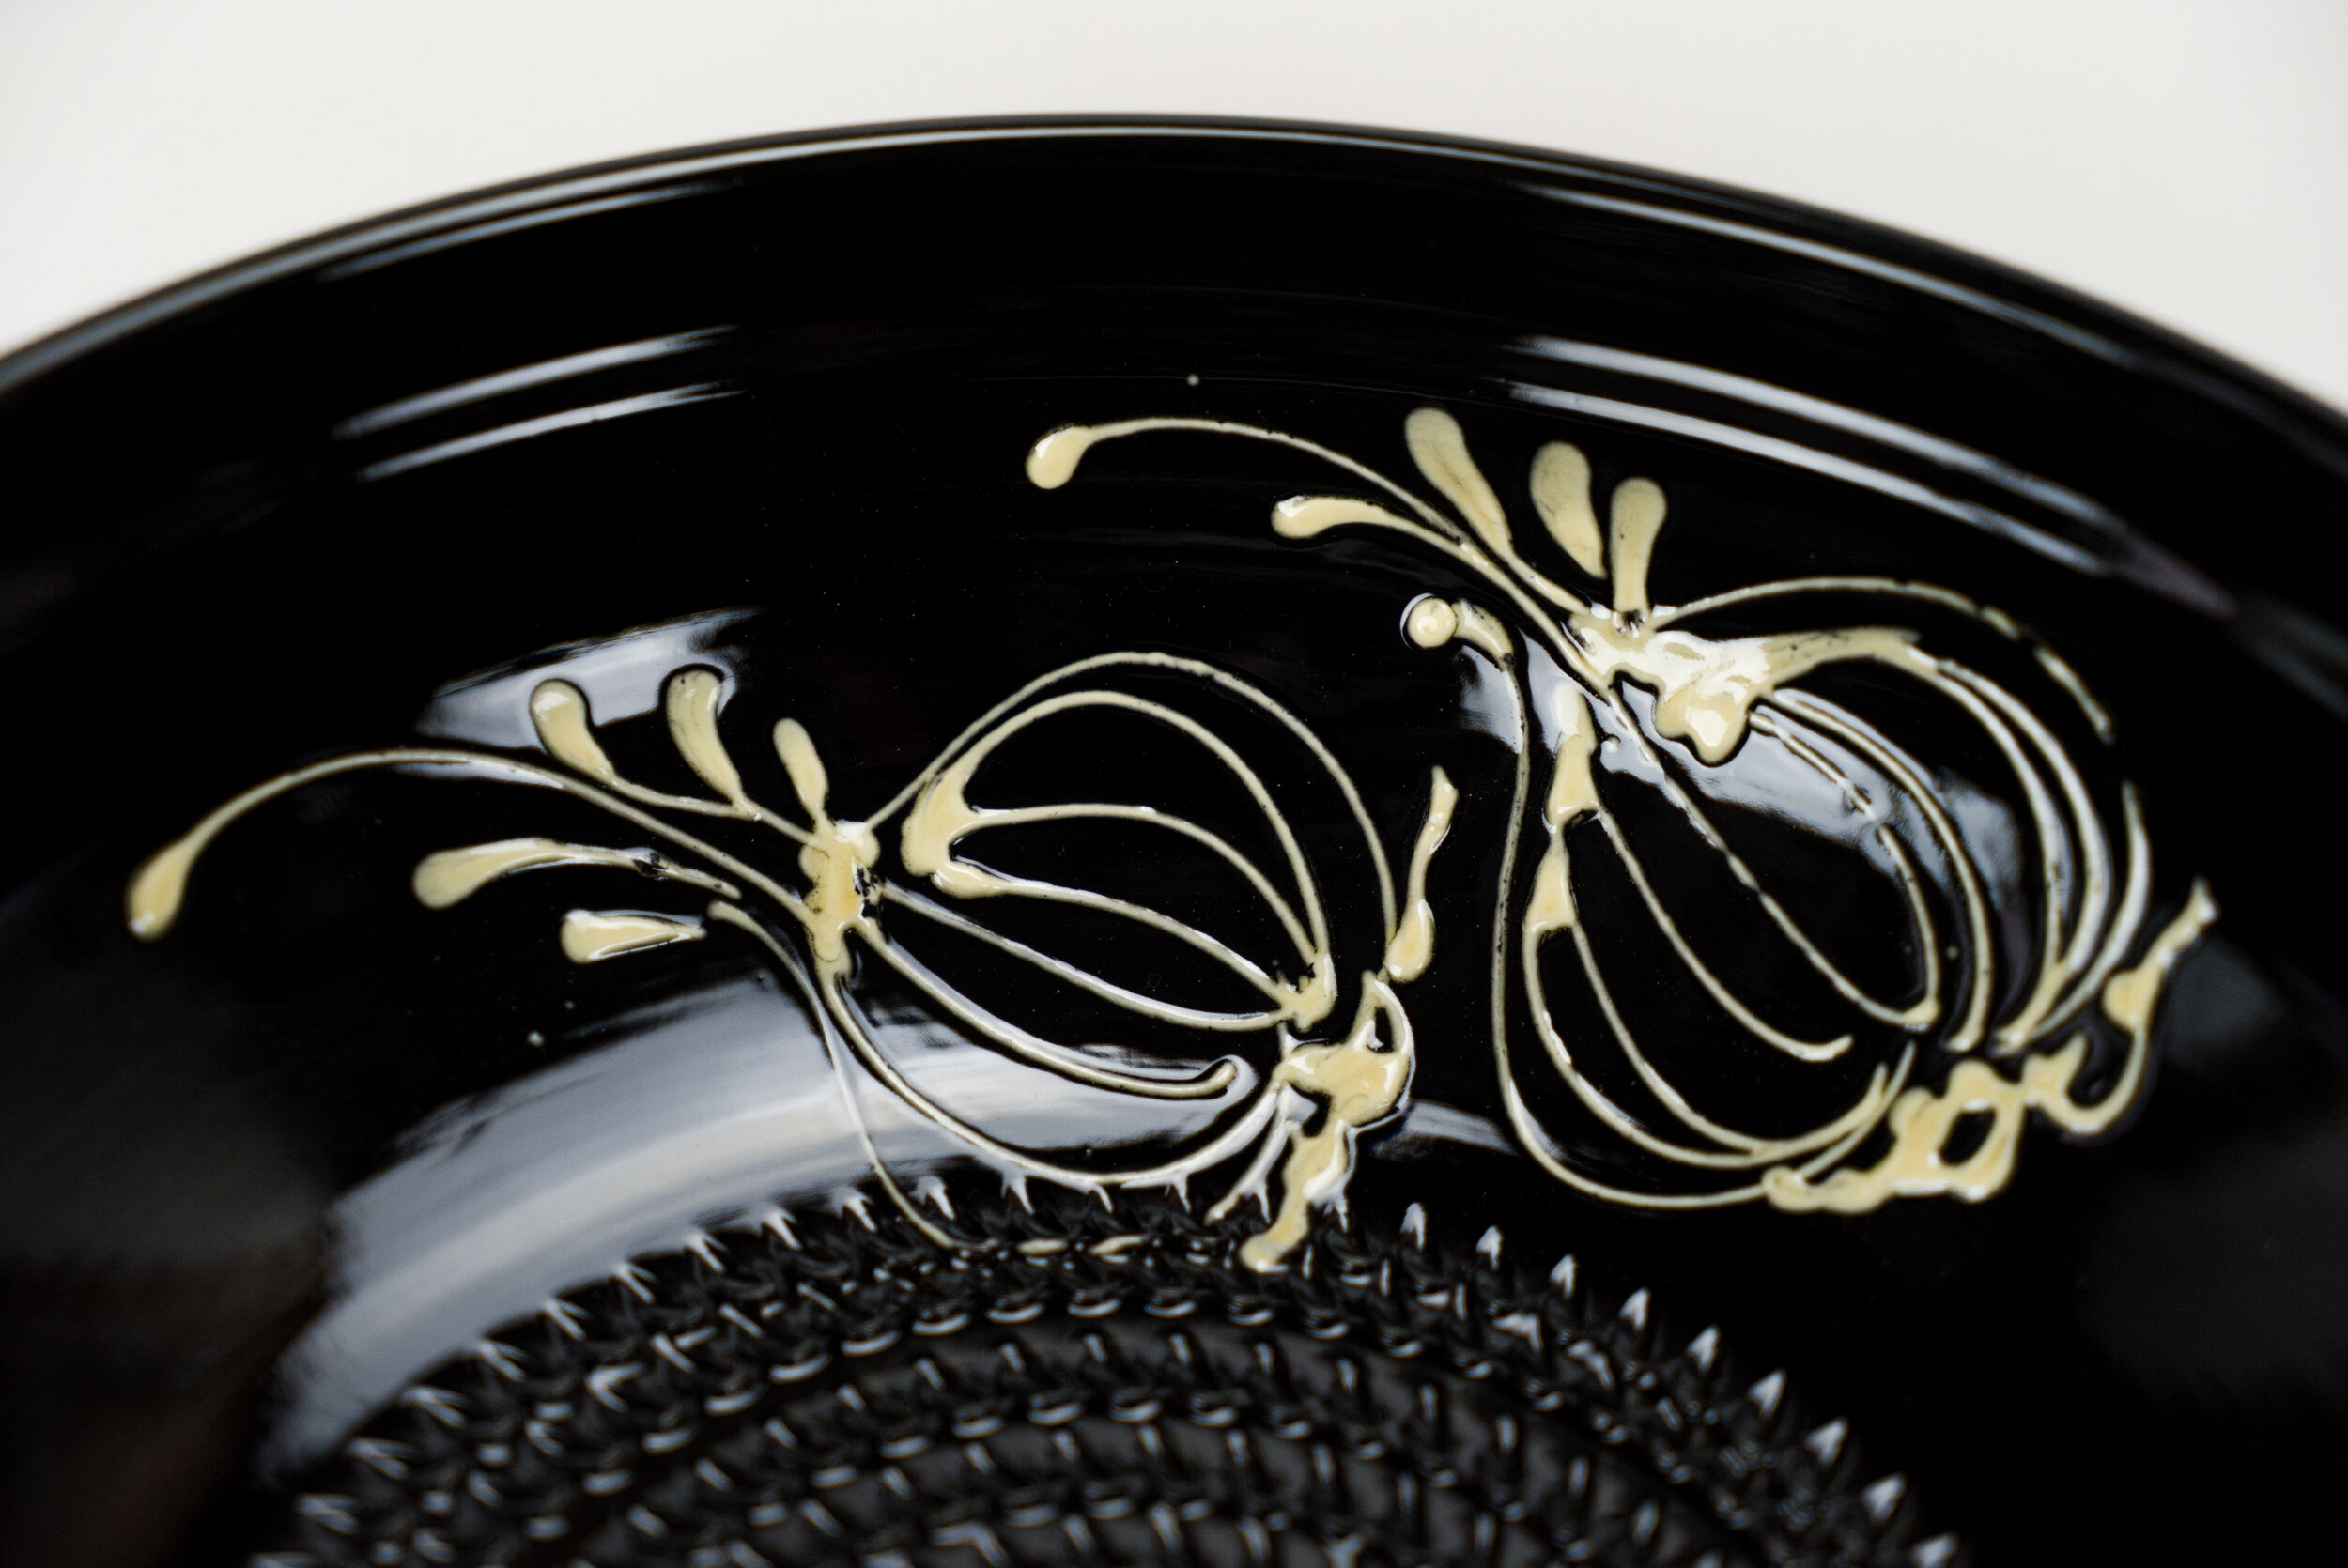 large black rasp bowl ceramic grater from spain